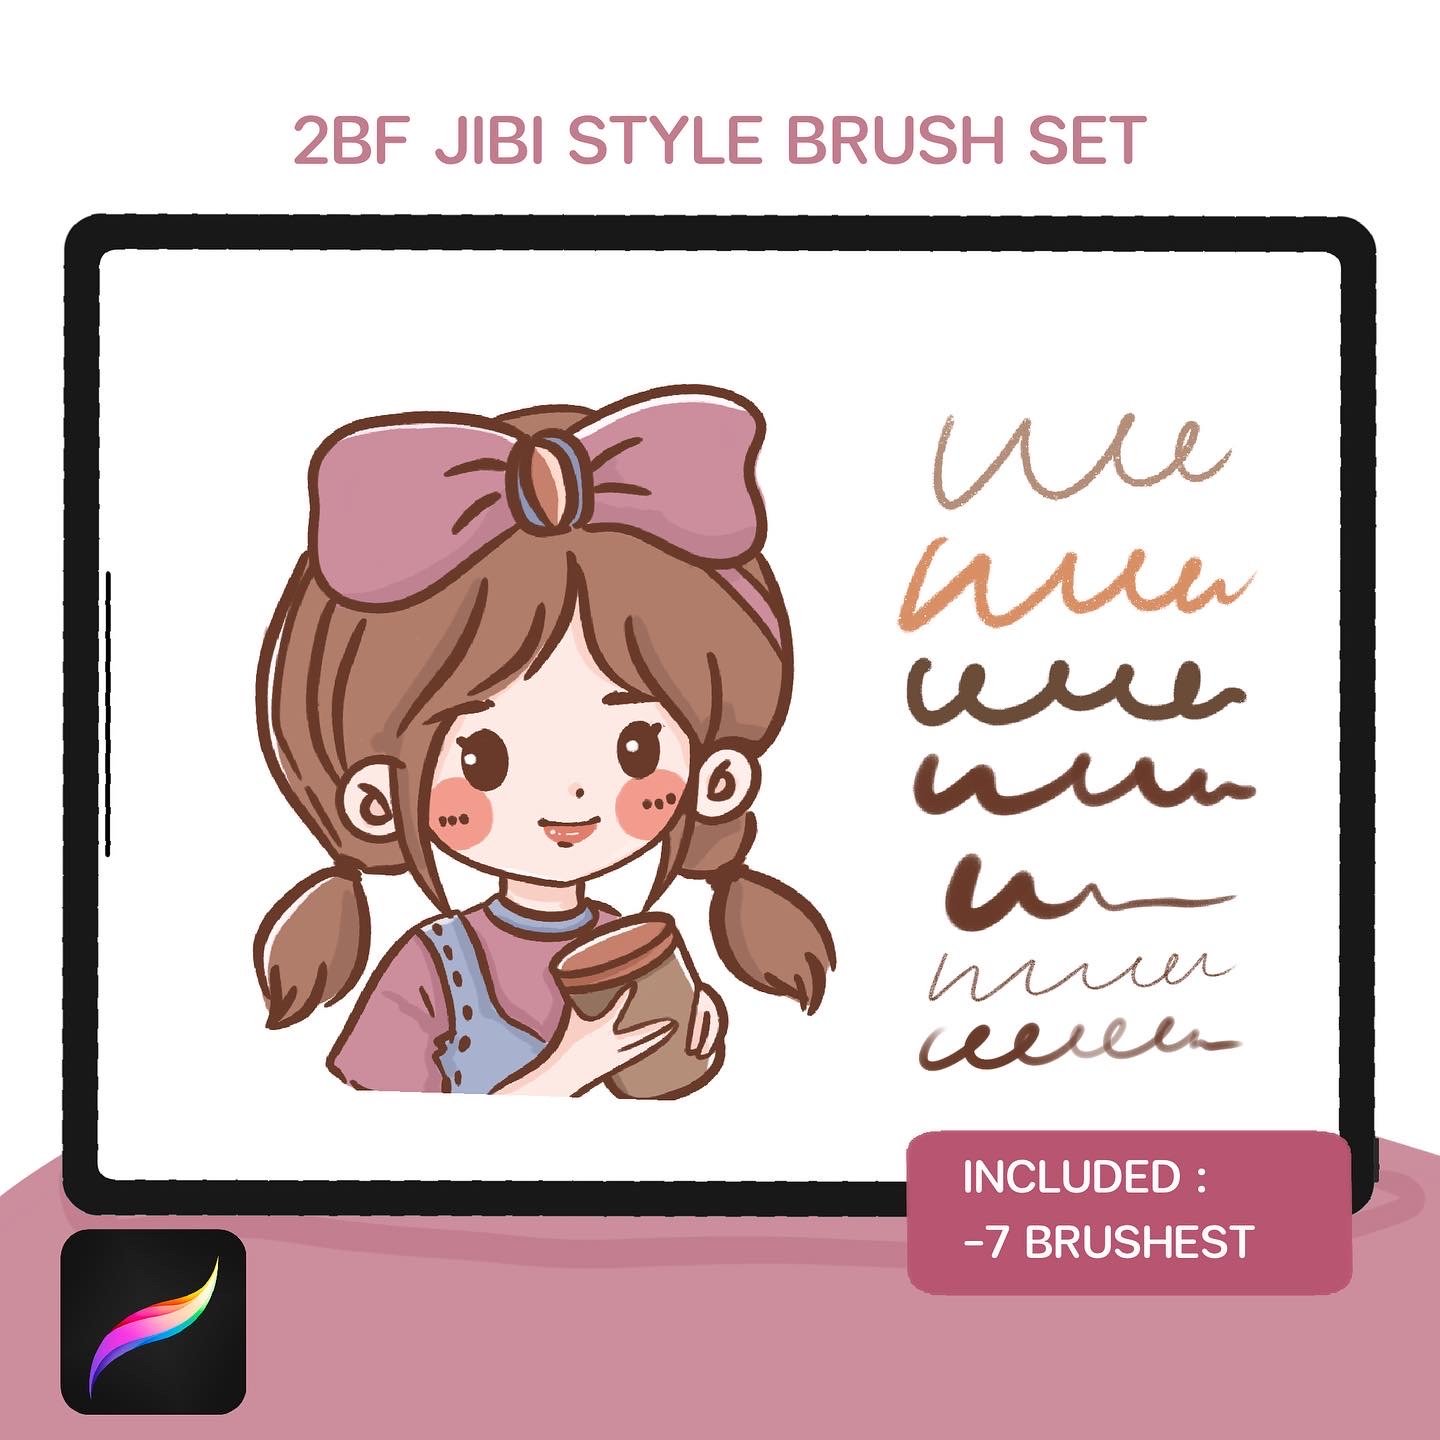 2BF Jibi Style Brush Set